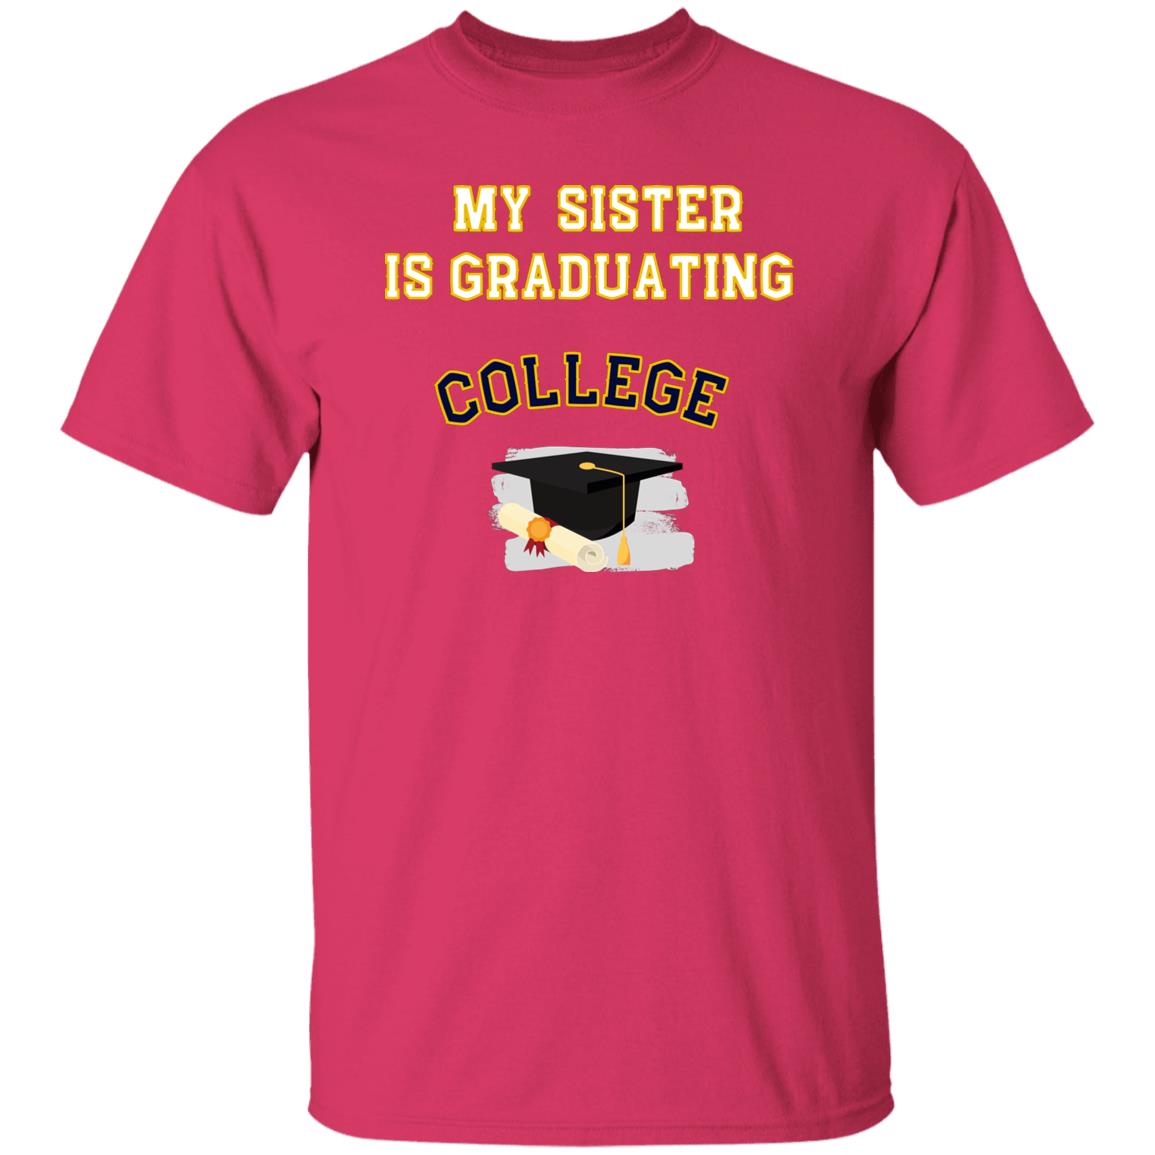 My sister is graduating College Tshirt